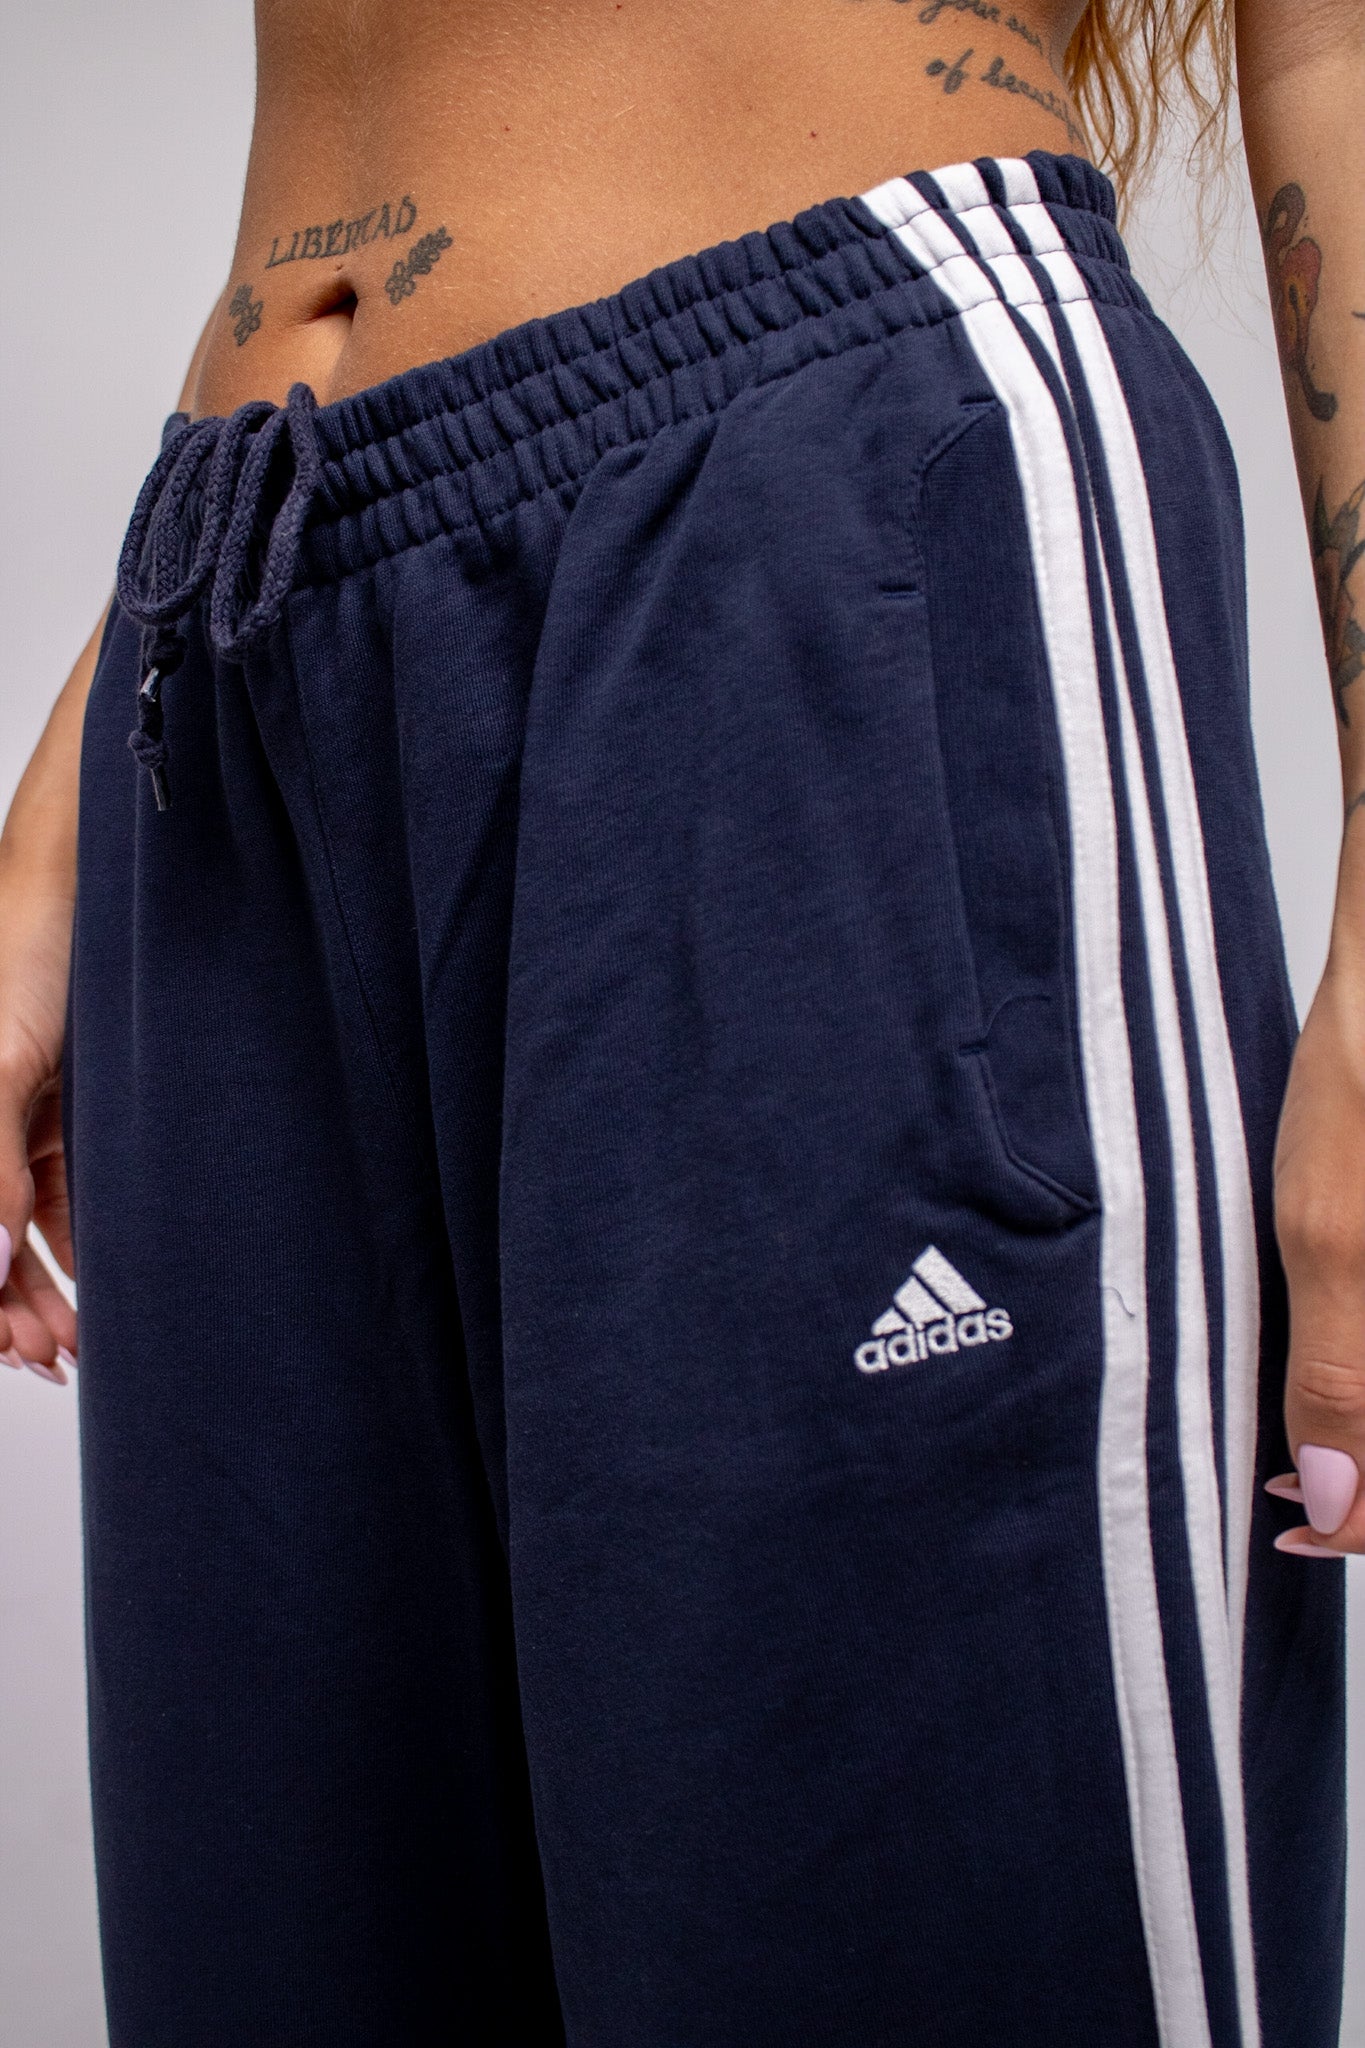 Adidas sweatpants